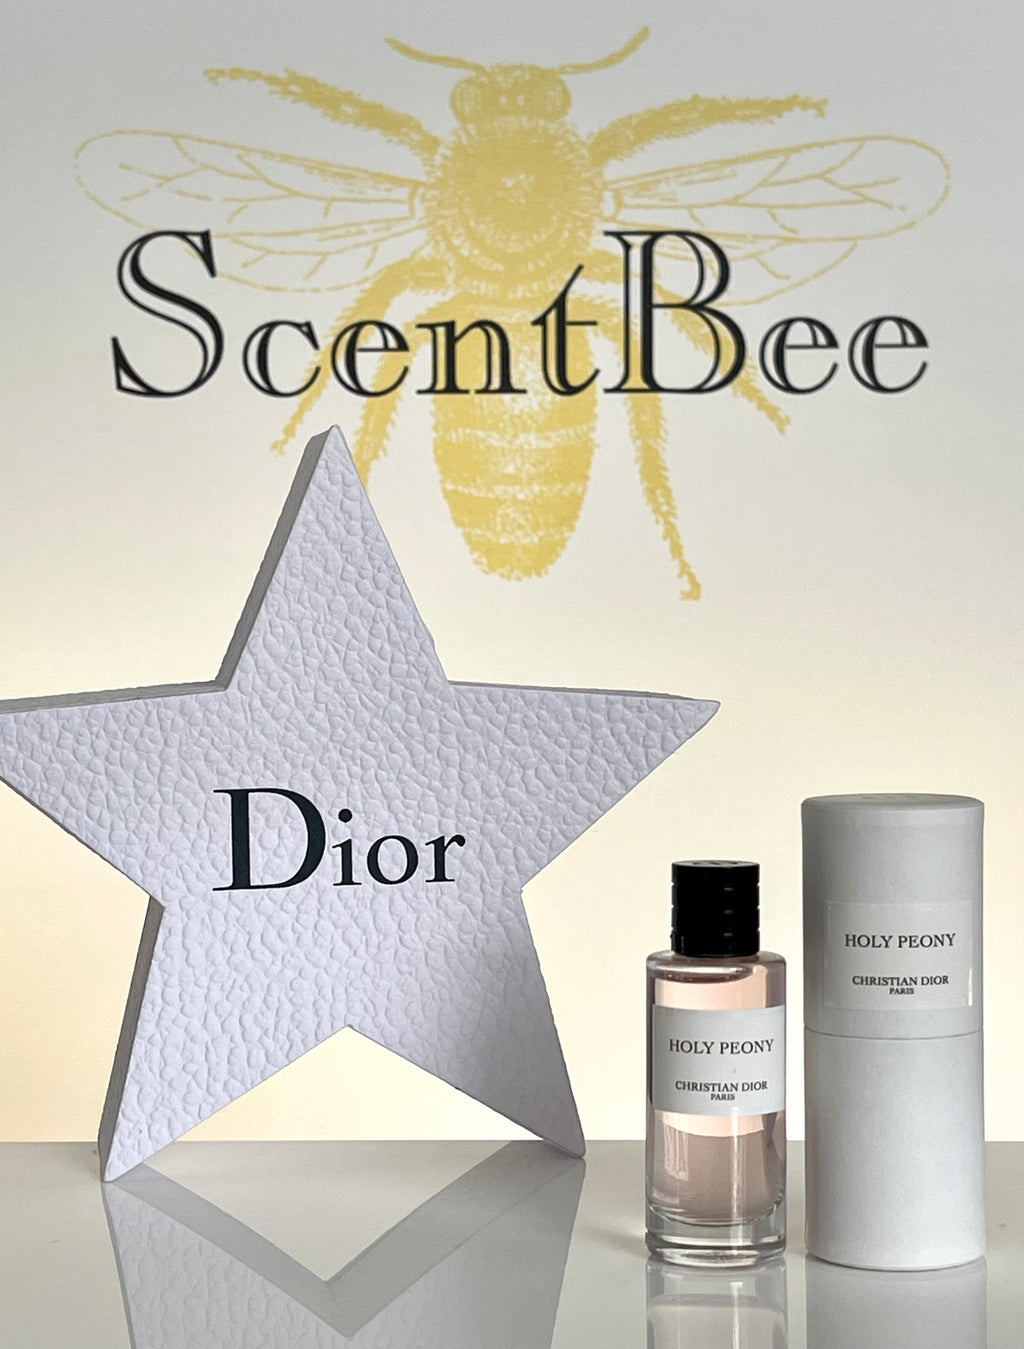 Buy Christian Dior Eau Noire Perfume Samples & Decants Online